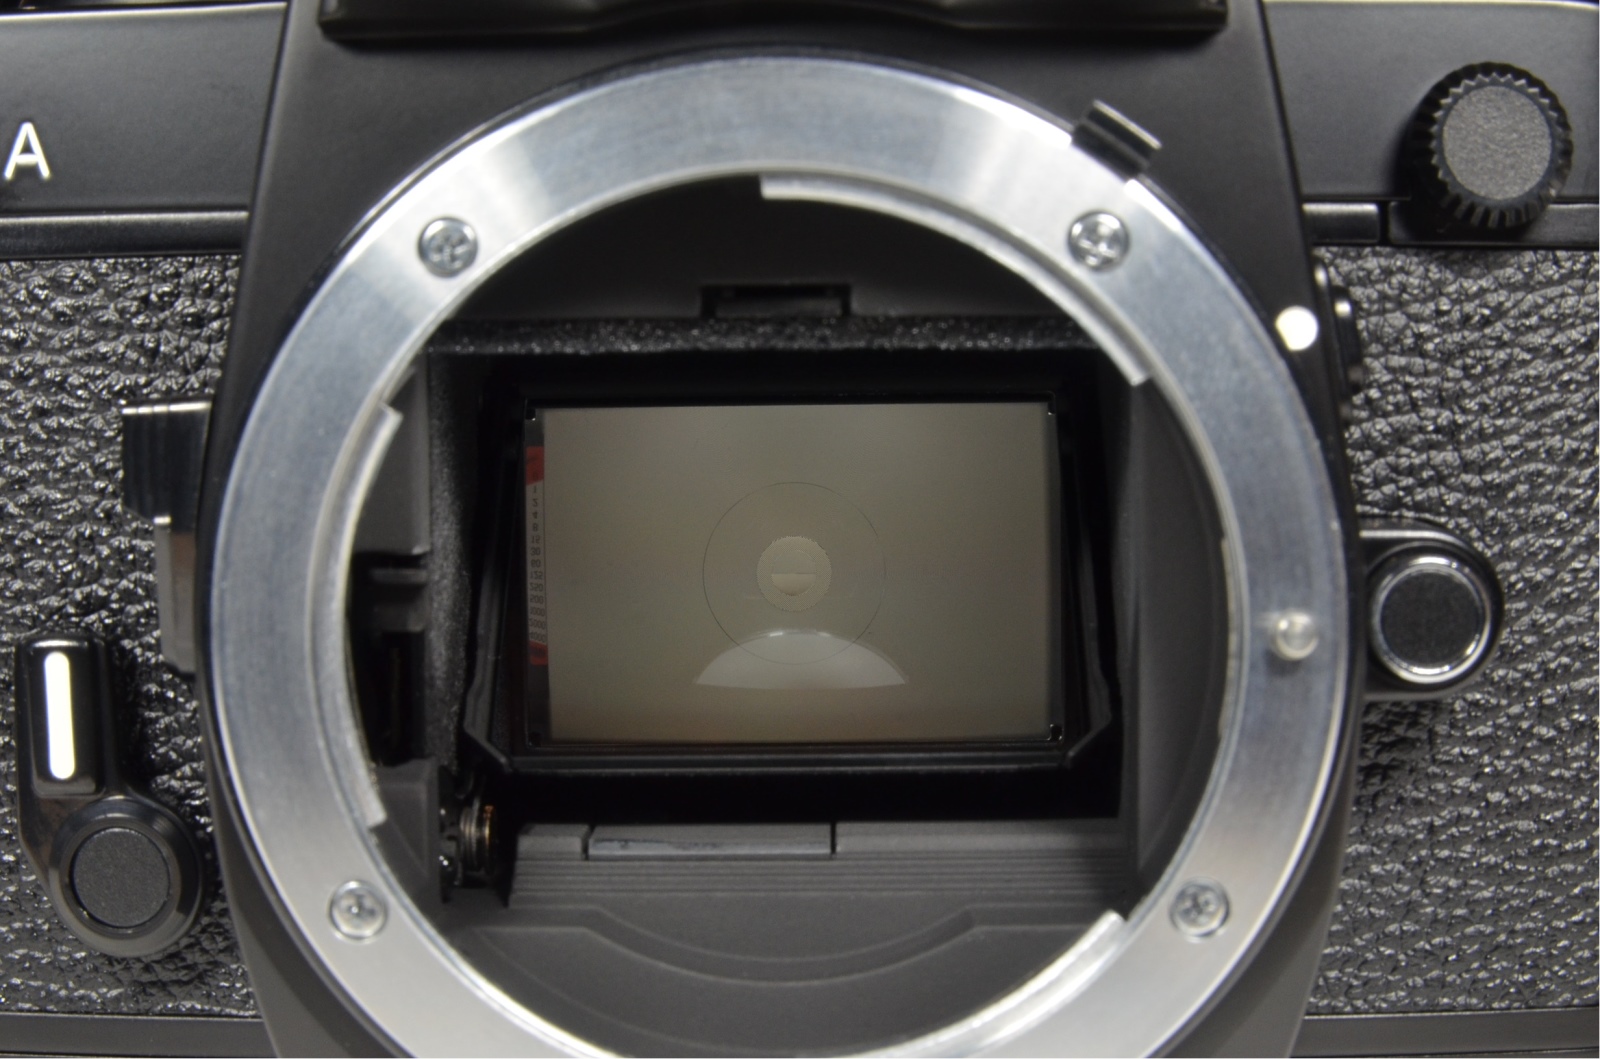 nikon fm3a 35mm film camera black 'unused'